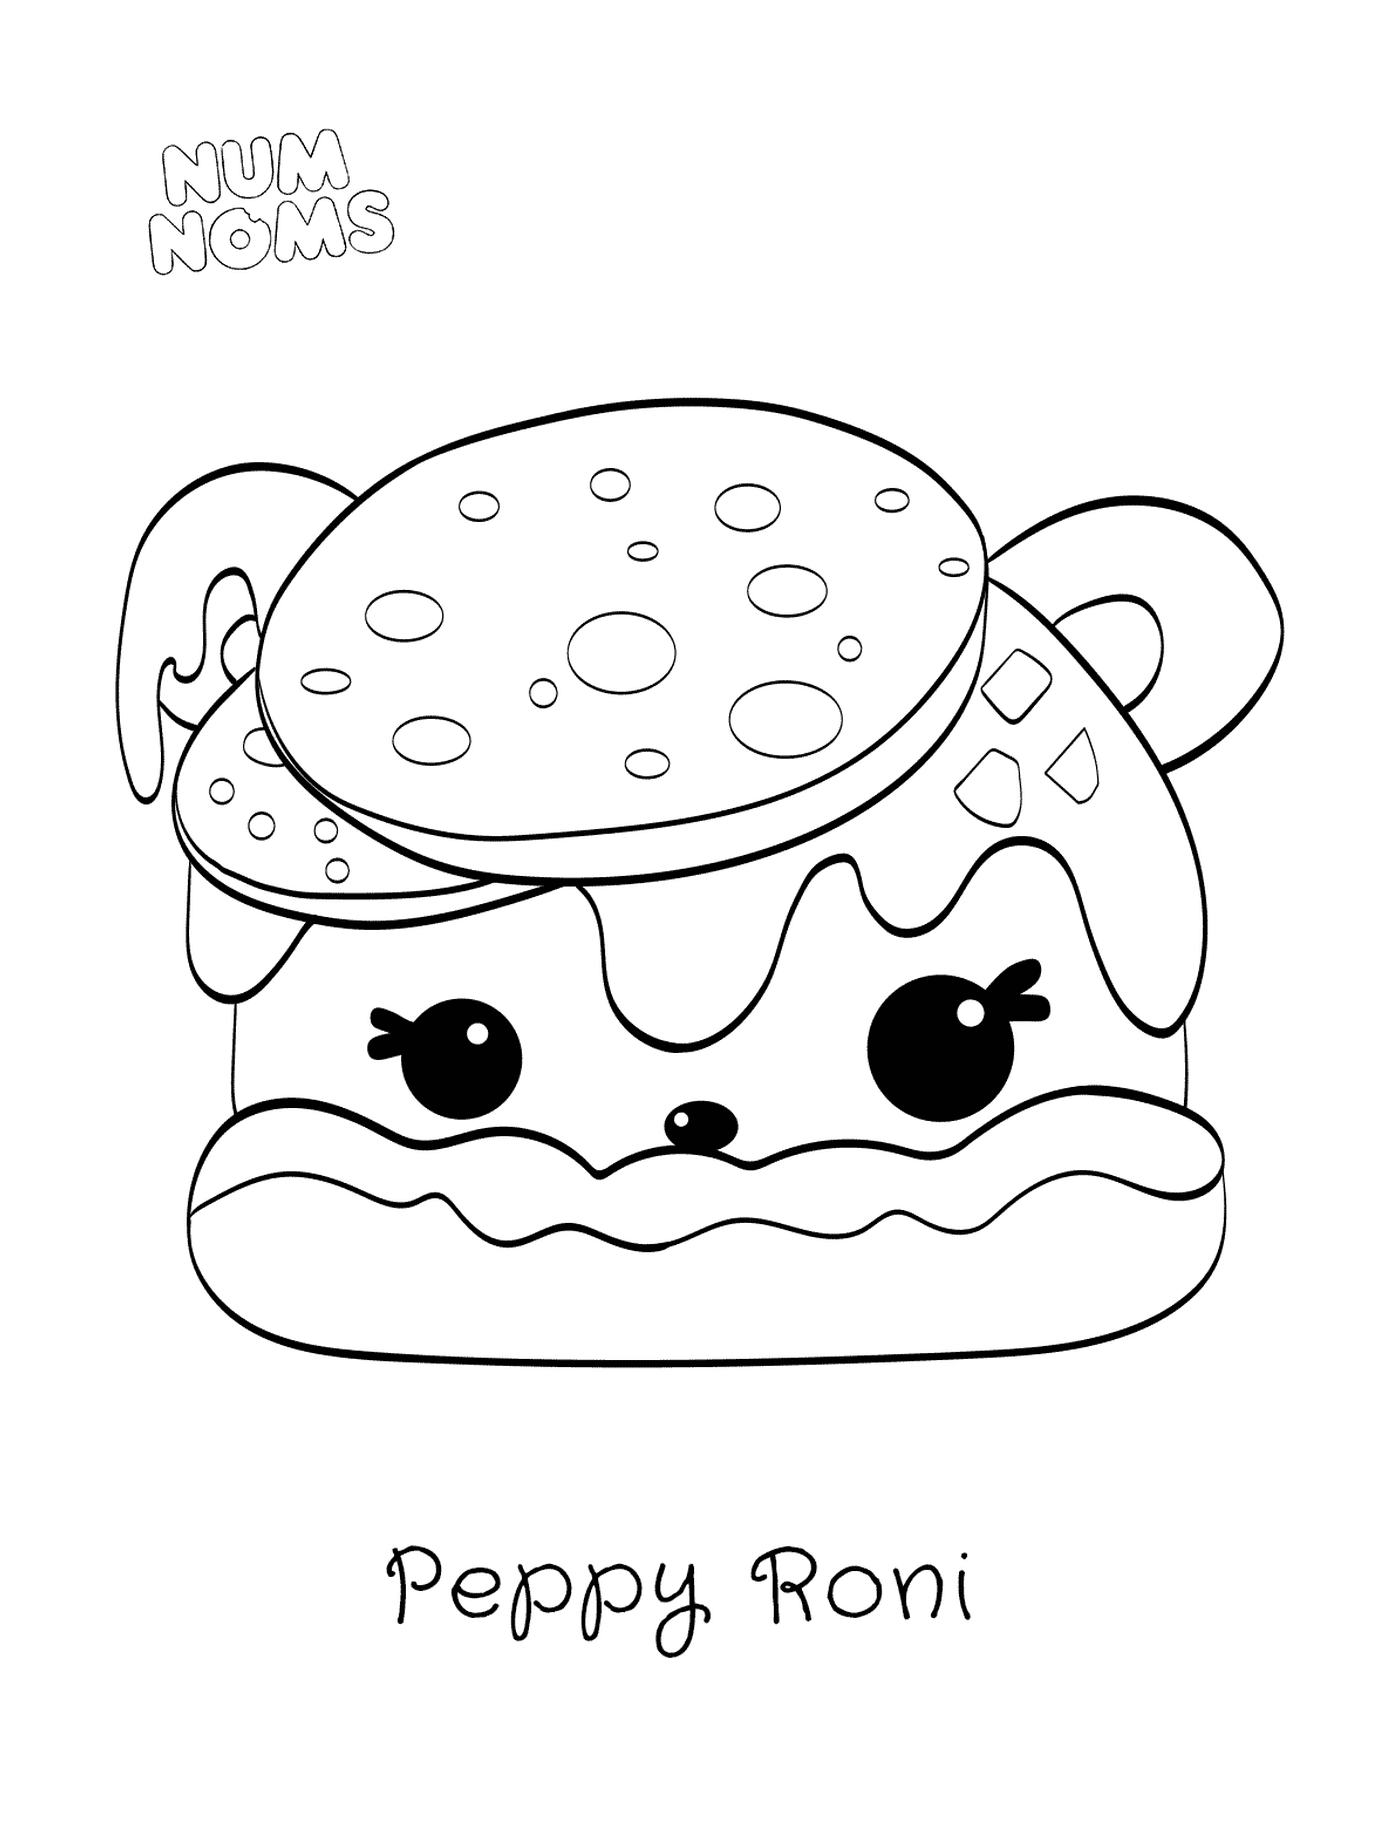  Pizza Peppy Roni 以 Num 命名 